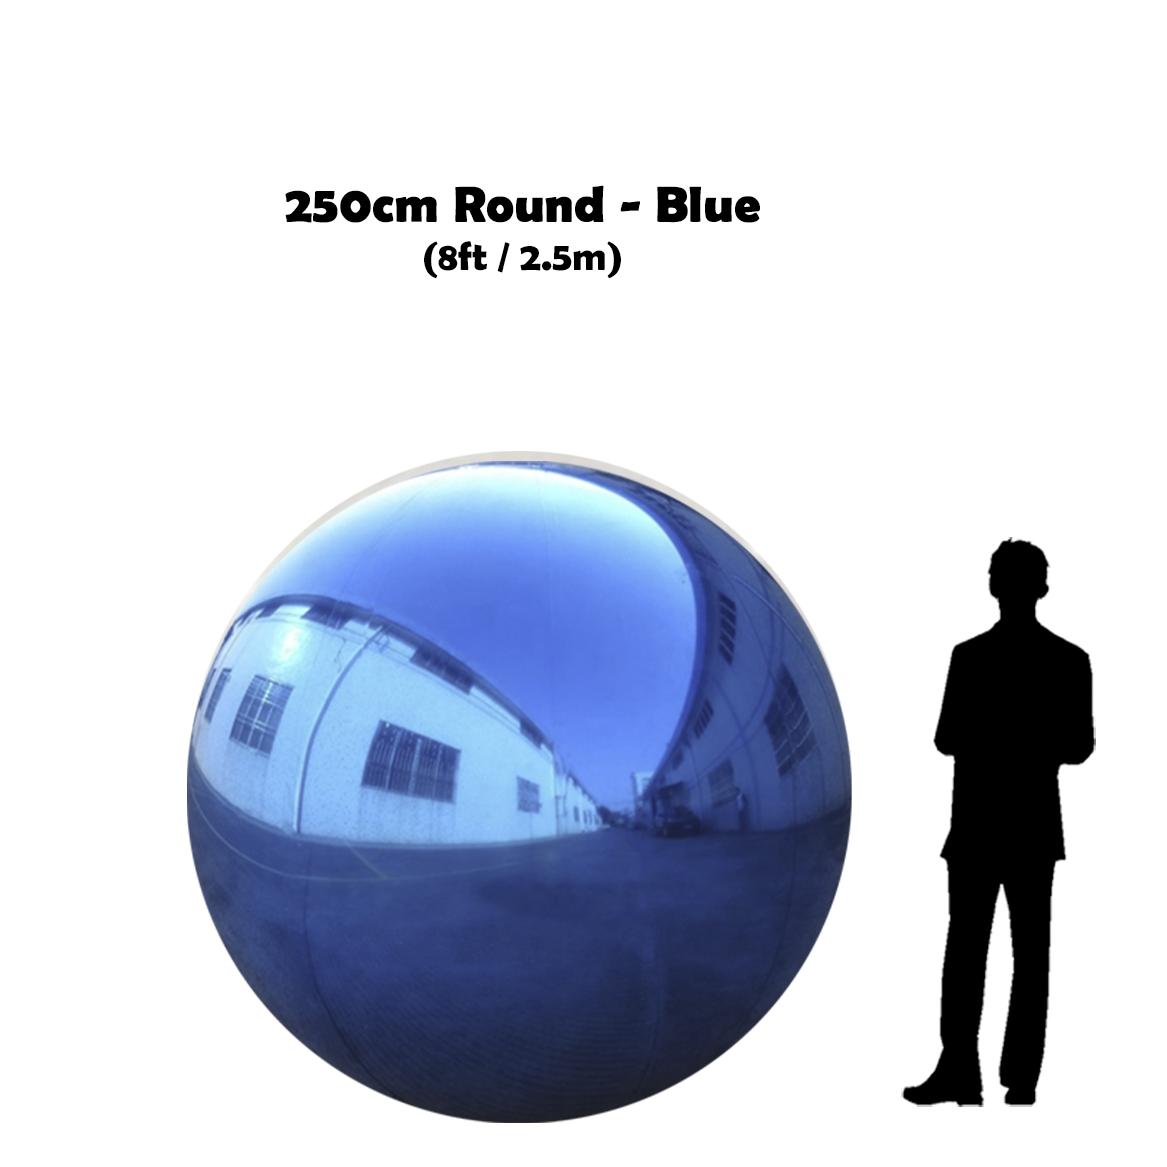 250 cm Big Blue ball beside 5'10 guy silhouette 